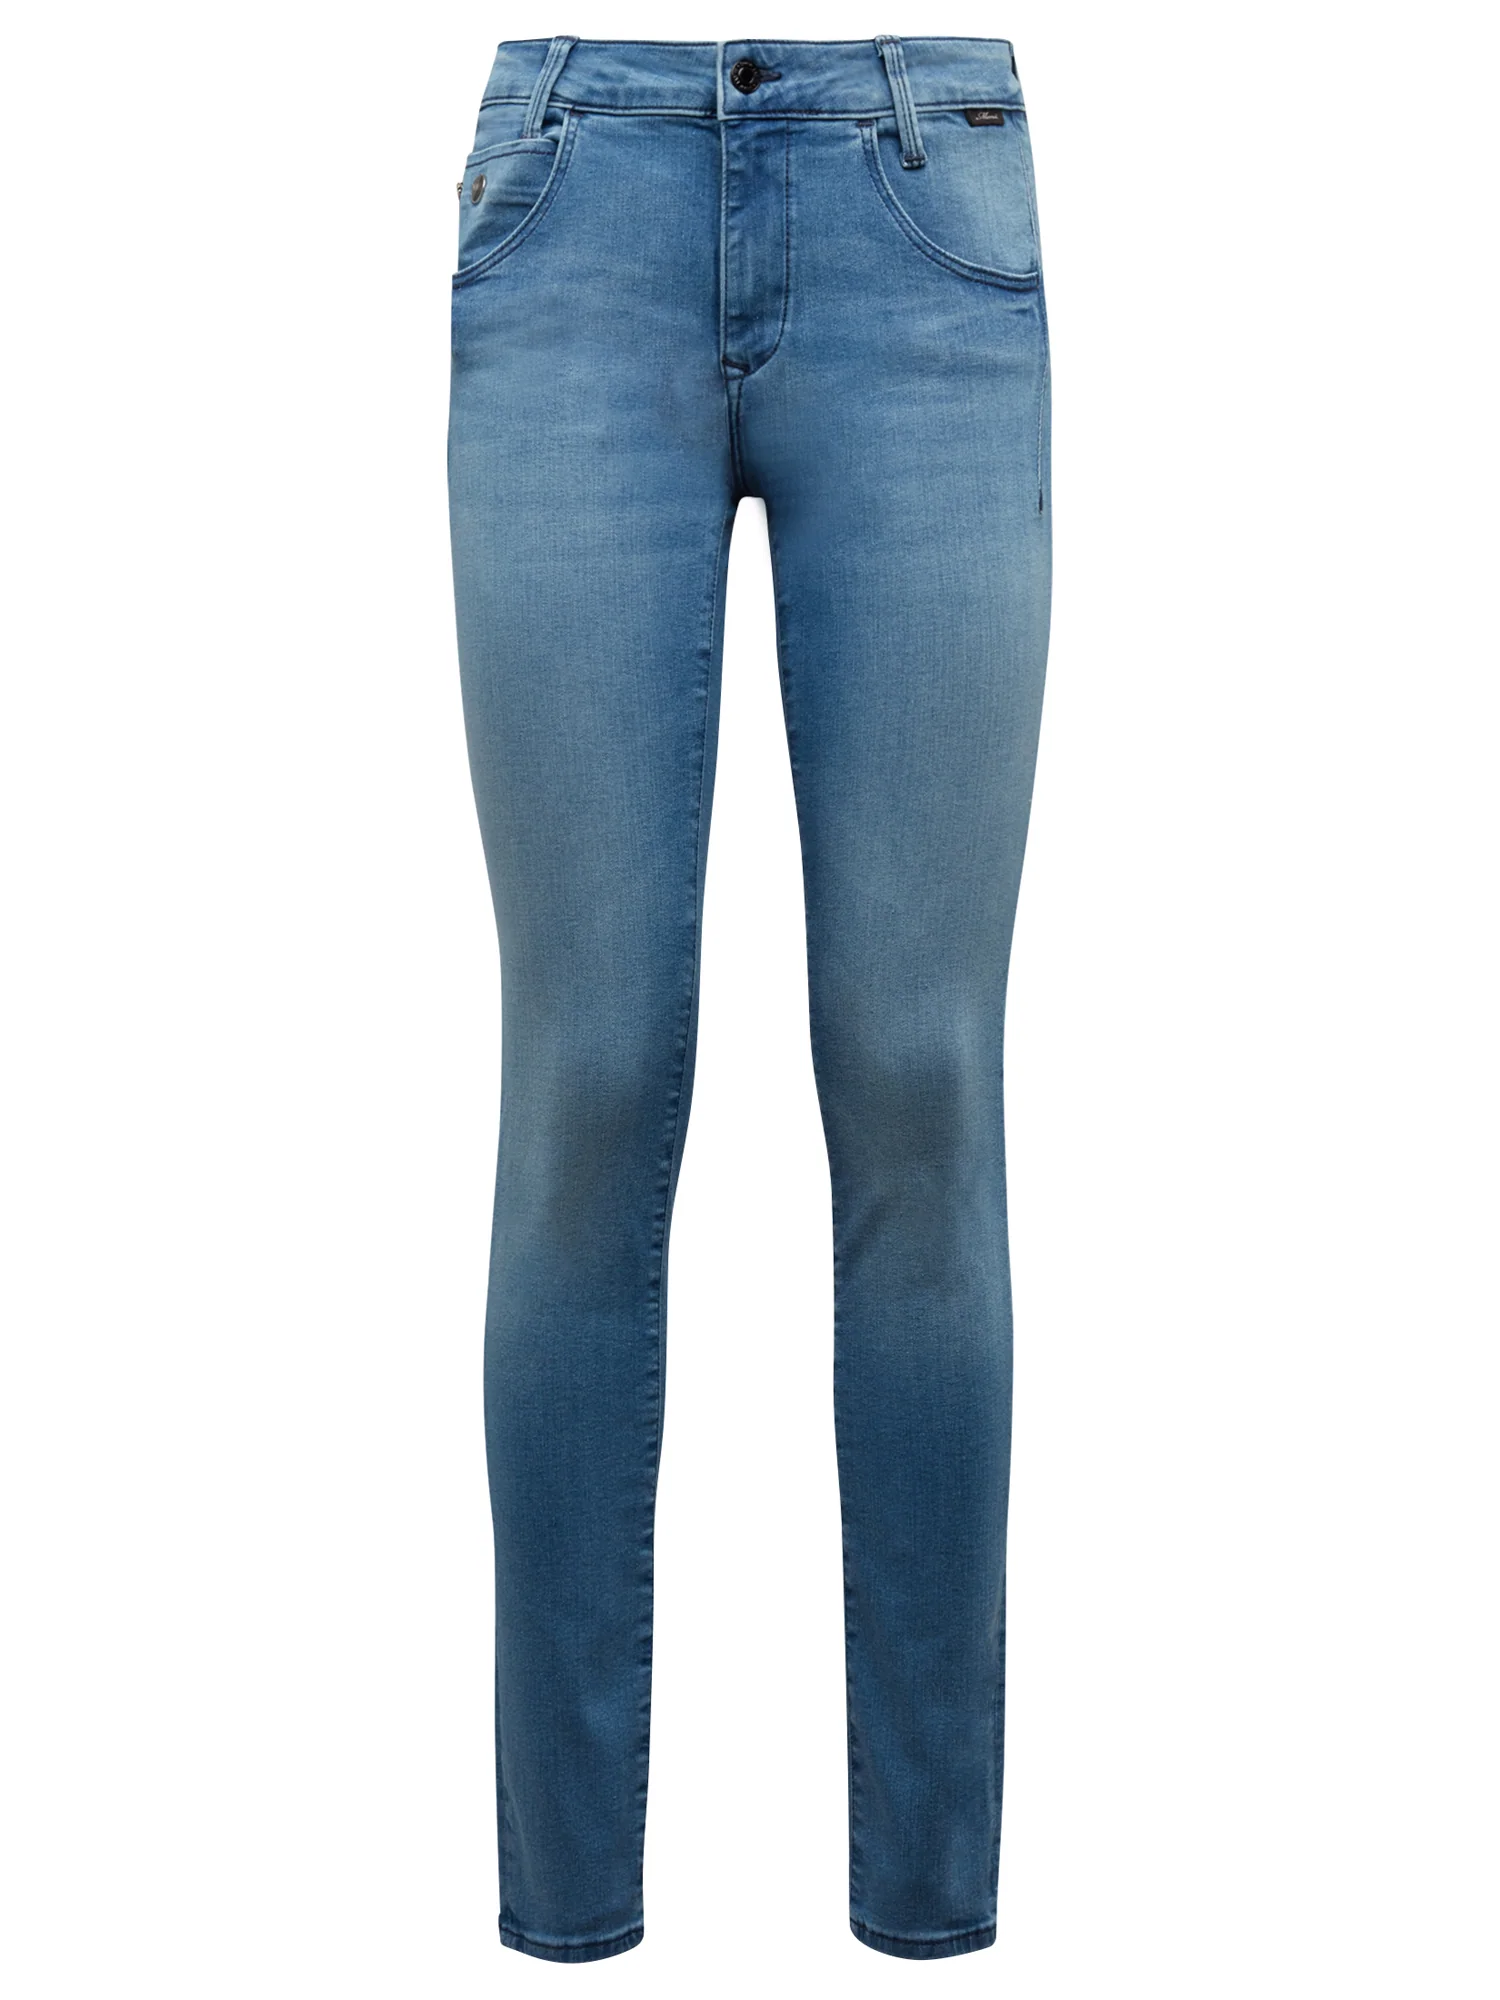 Mavi ADRIANA | Mid Rise, Super Skinny Jeans in LT Glam 